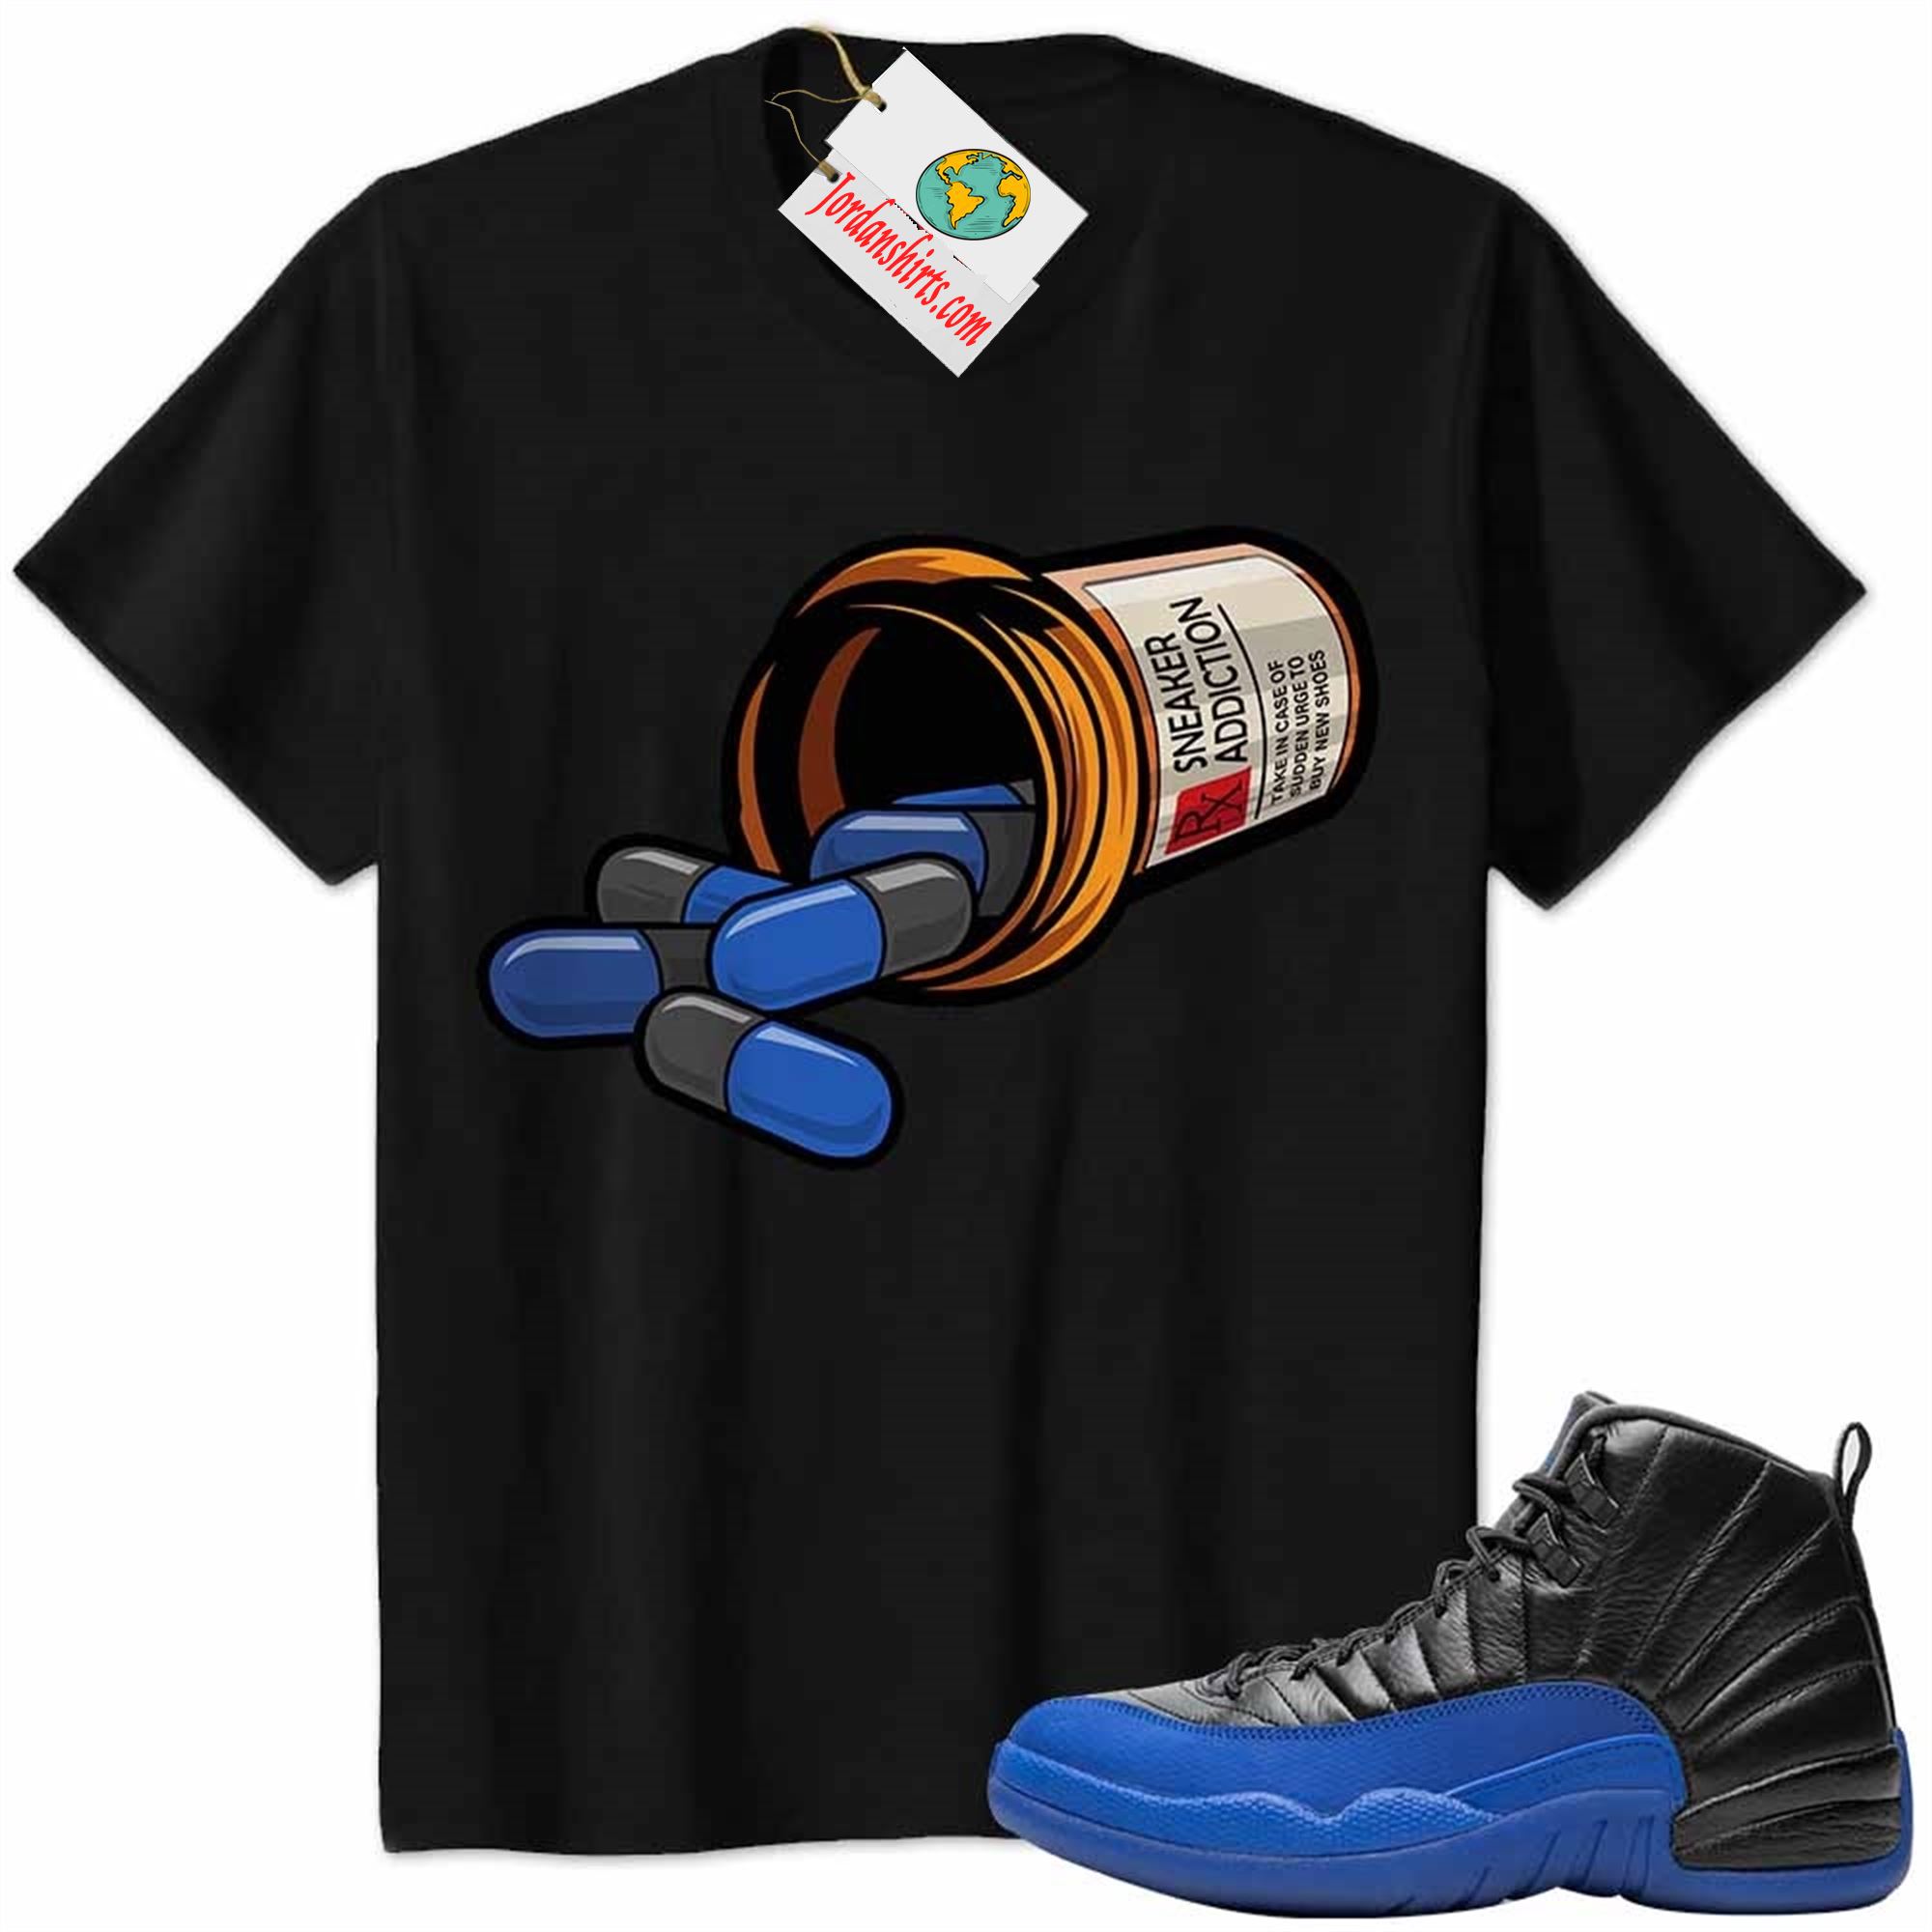 Jordan 12 Shirt, Rx Drugs Pill Bottle Sneaker Addiction Black Air Jordan 12 Game Royal 12s Plus Size Up To 5xl